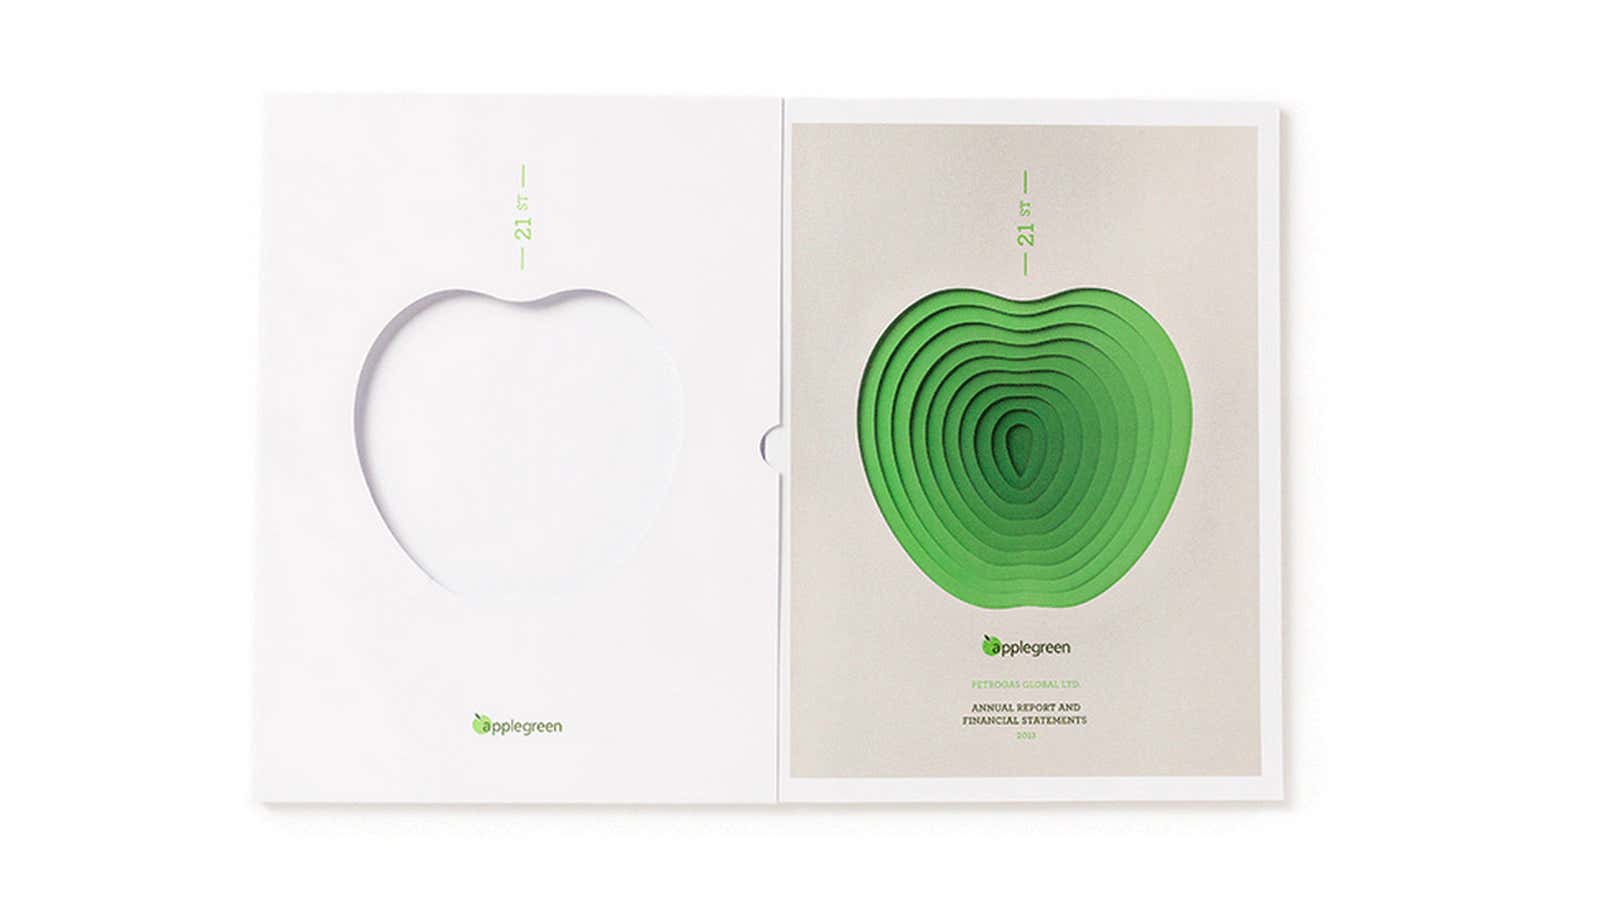 Annual Report for Irish forecourt retailer, Applegreen, by Biografica